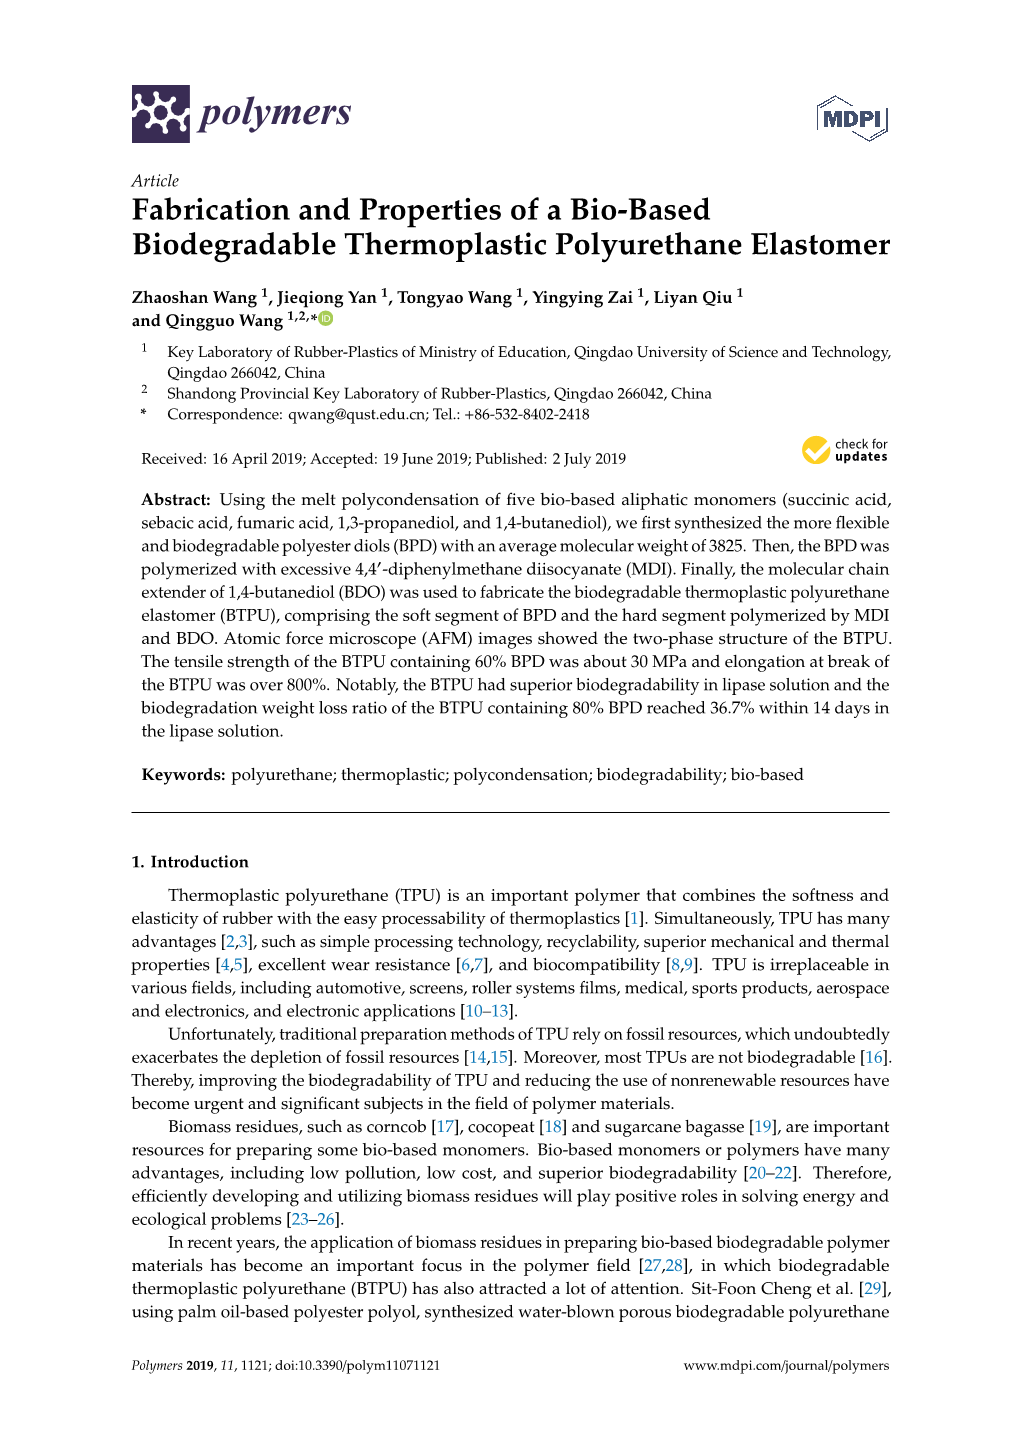 Fabrication and Properties of a Bio-Based Biodegradable Thermoplastic Polyurethane Elastomer